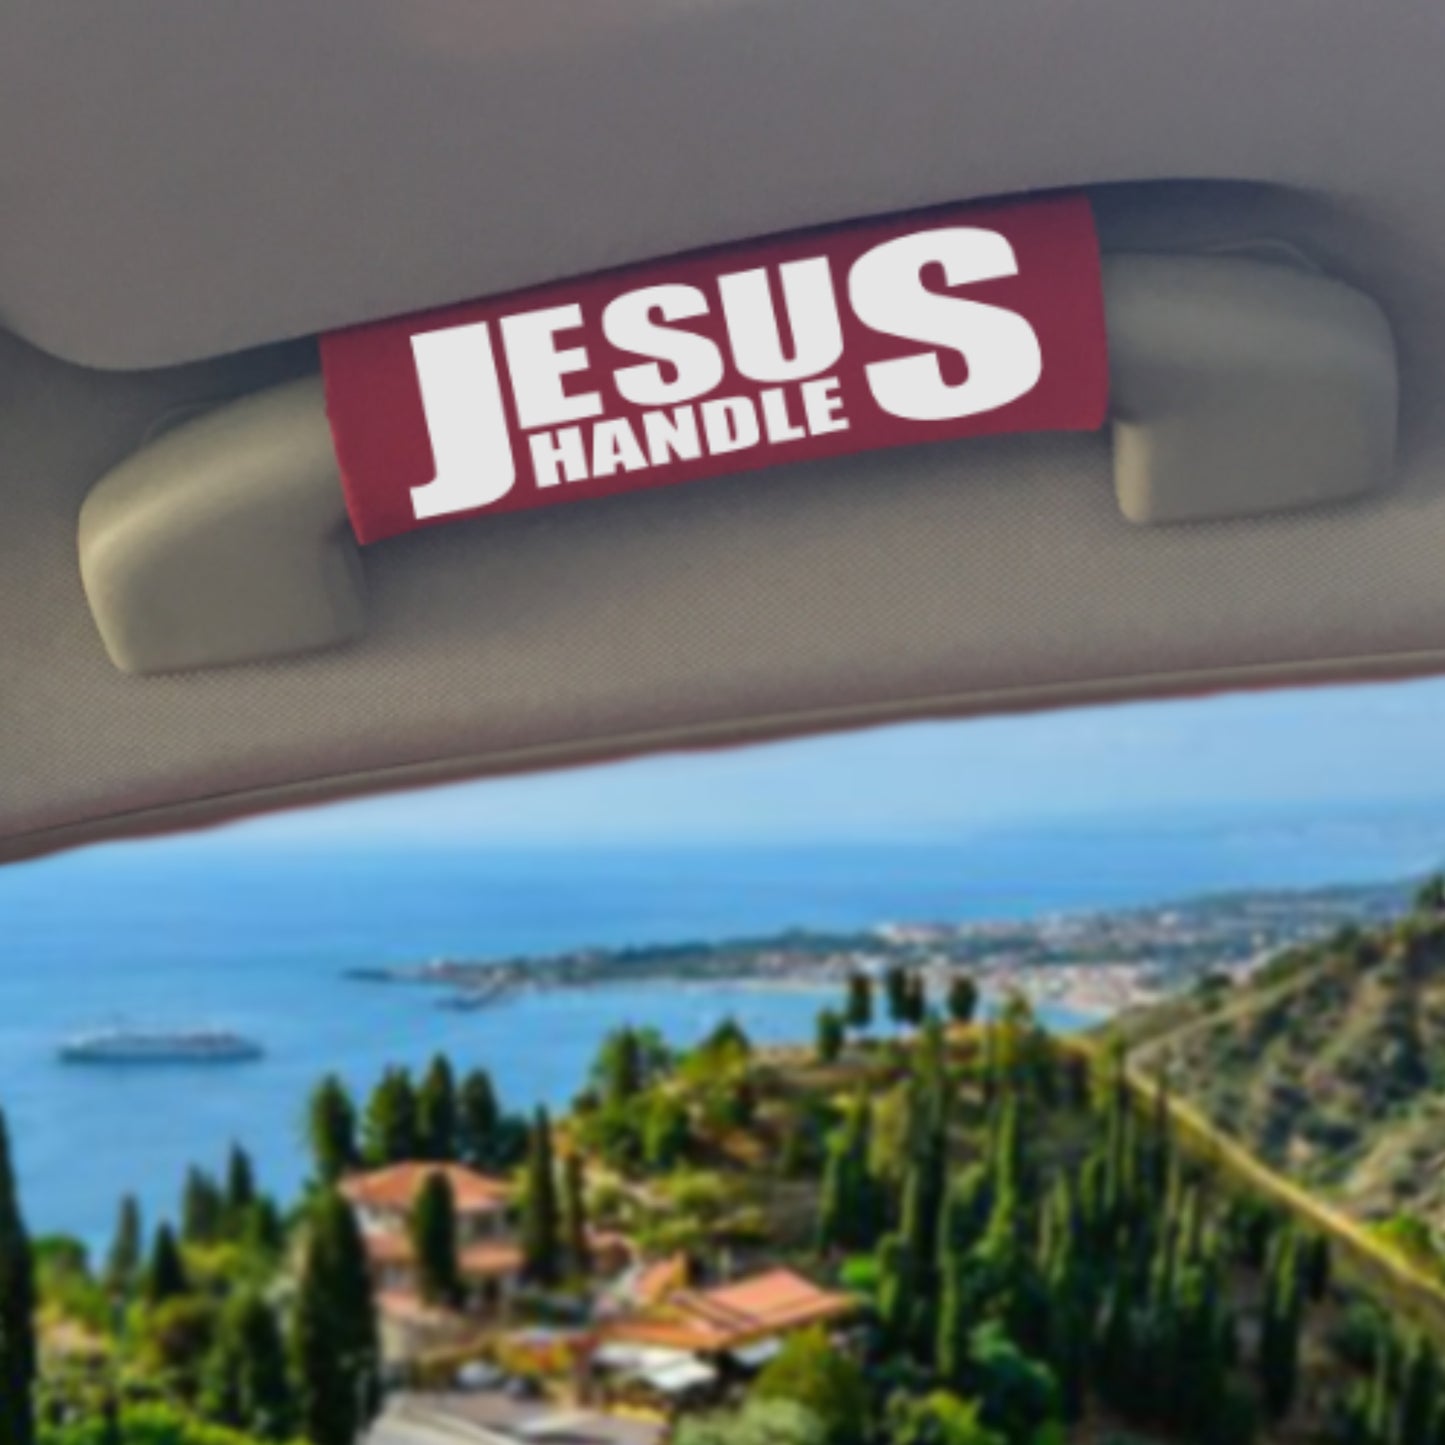 The Jesus Handle.